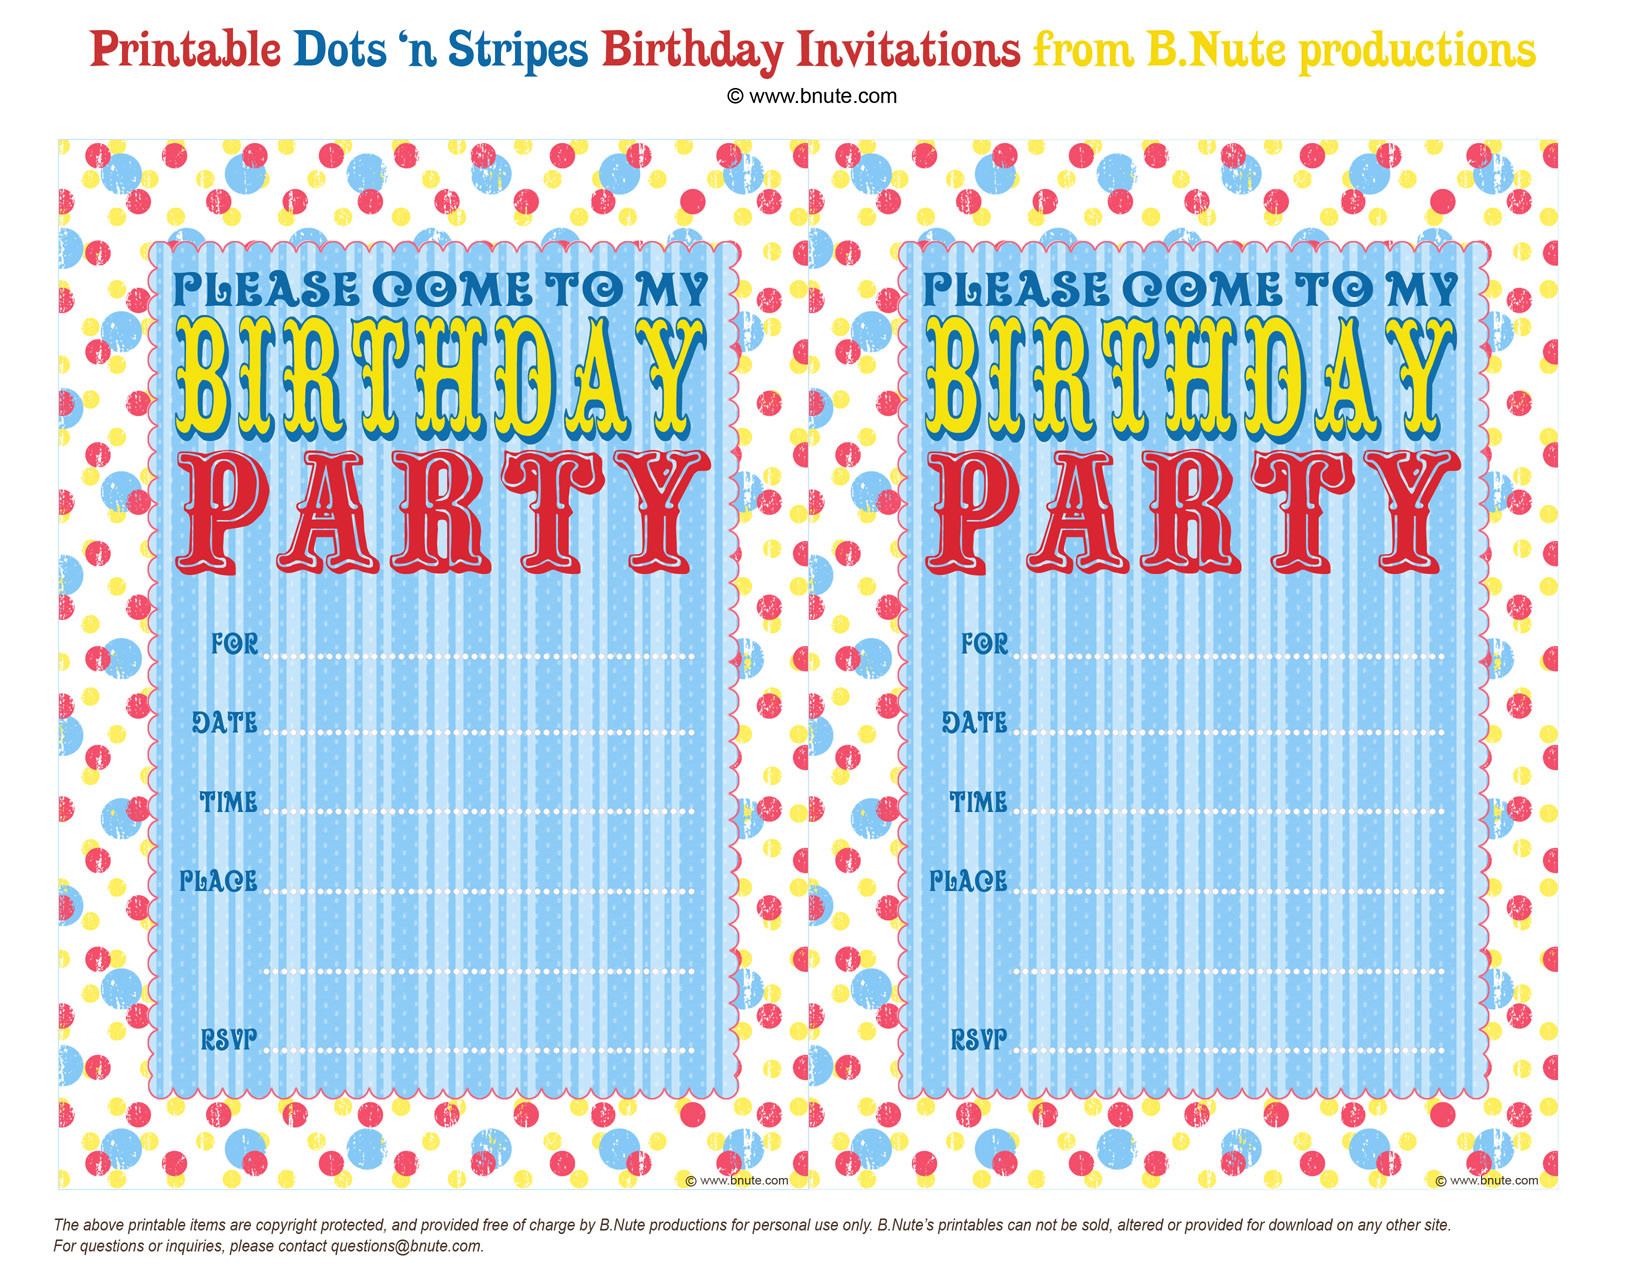 Free Birthday Invitations To Print
 bnute productions Free Printable Dots n Stripes Birthday